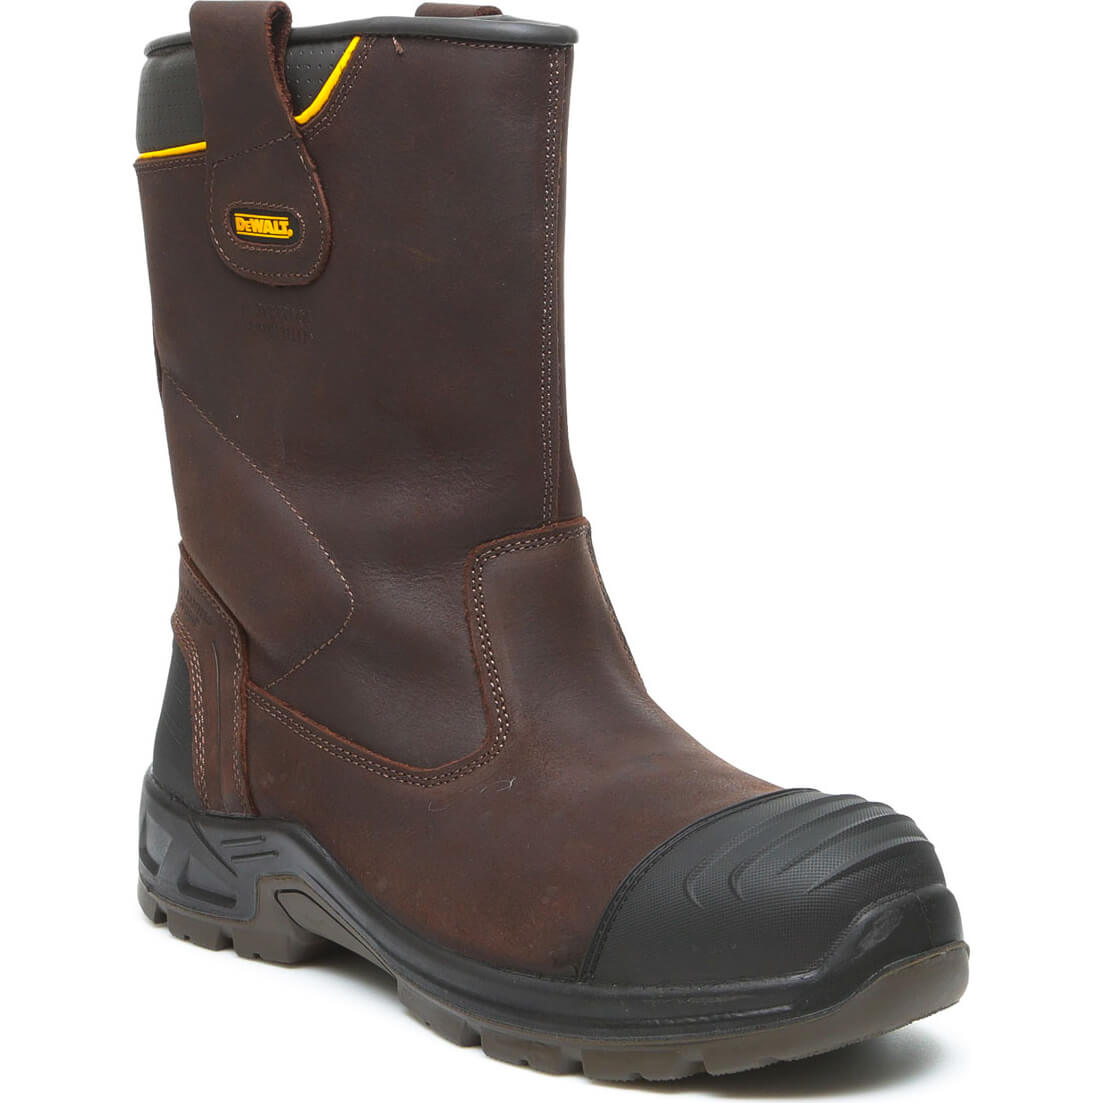 DeWalt Millington Waterproof Safety Rigger Boots Brown Size 9